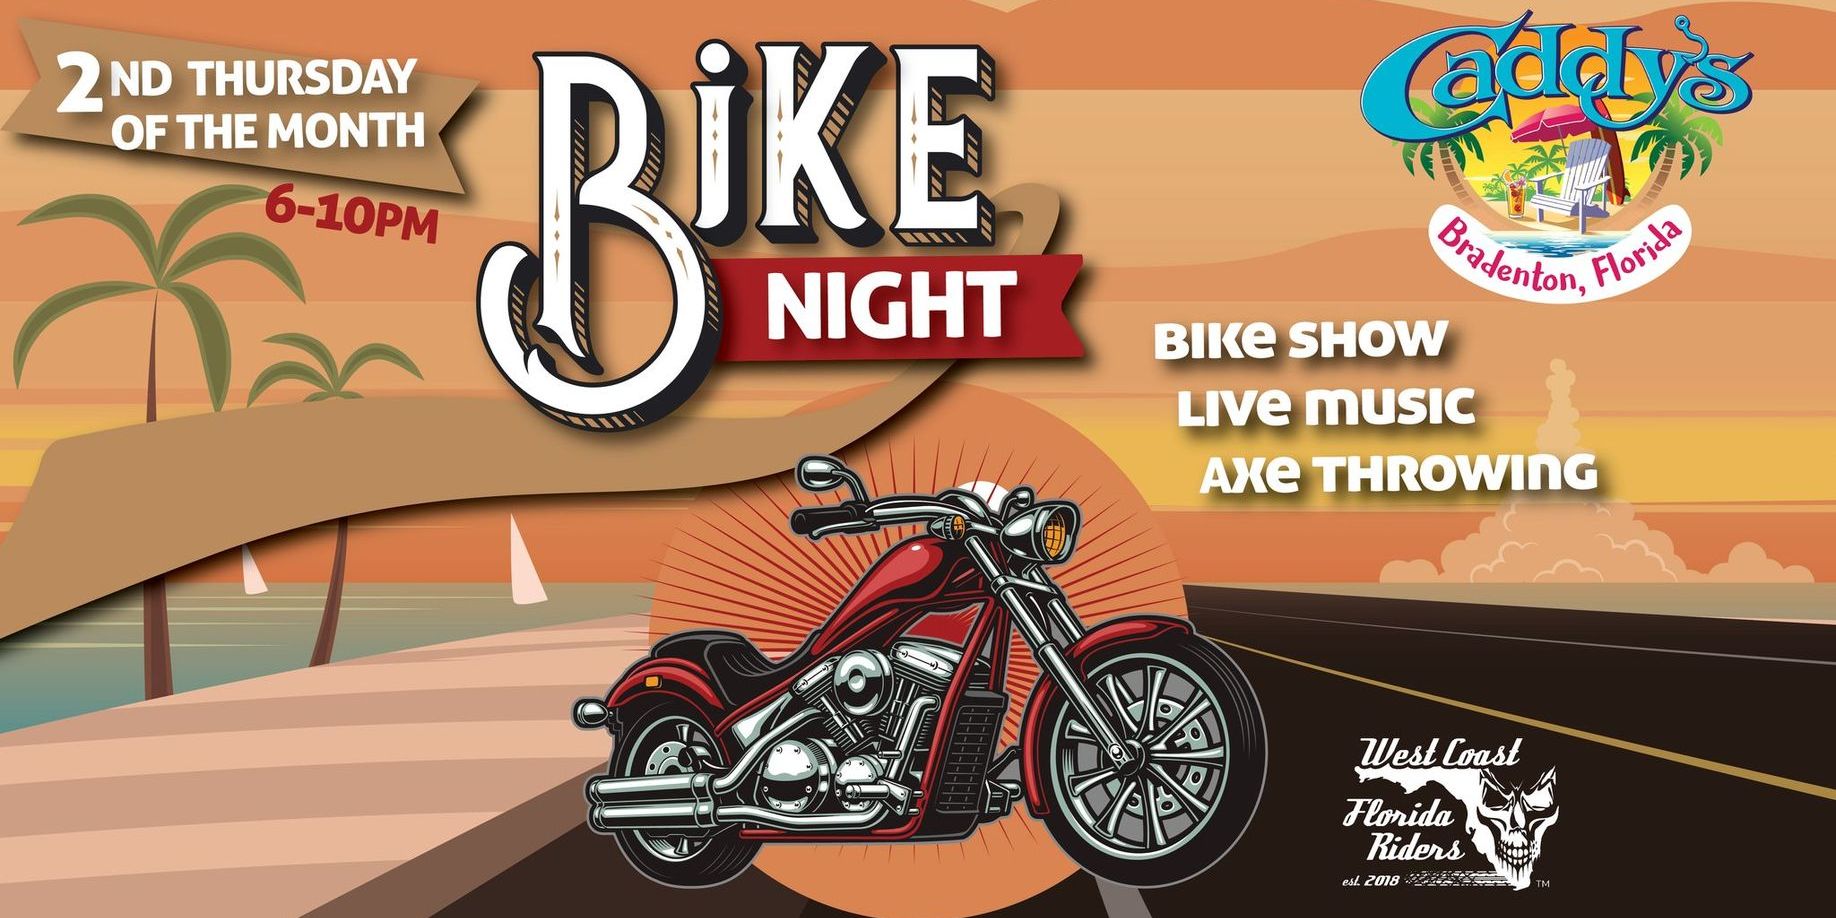 Bike Night promotional image